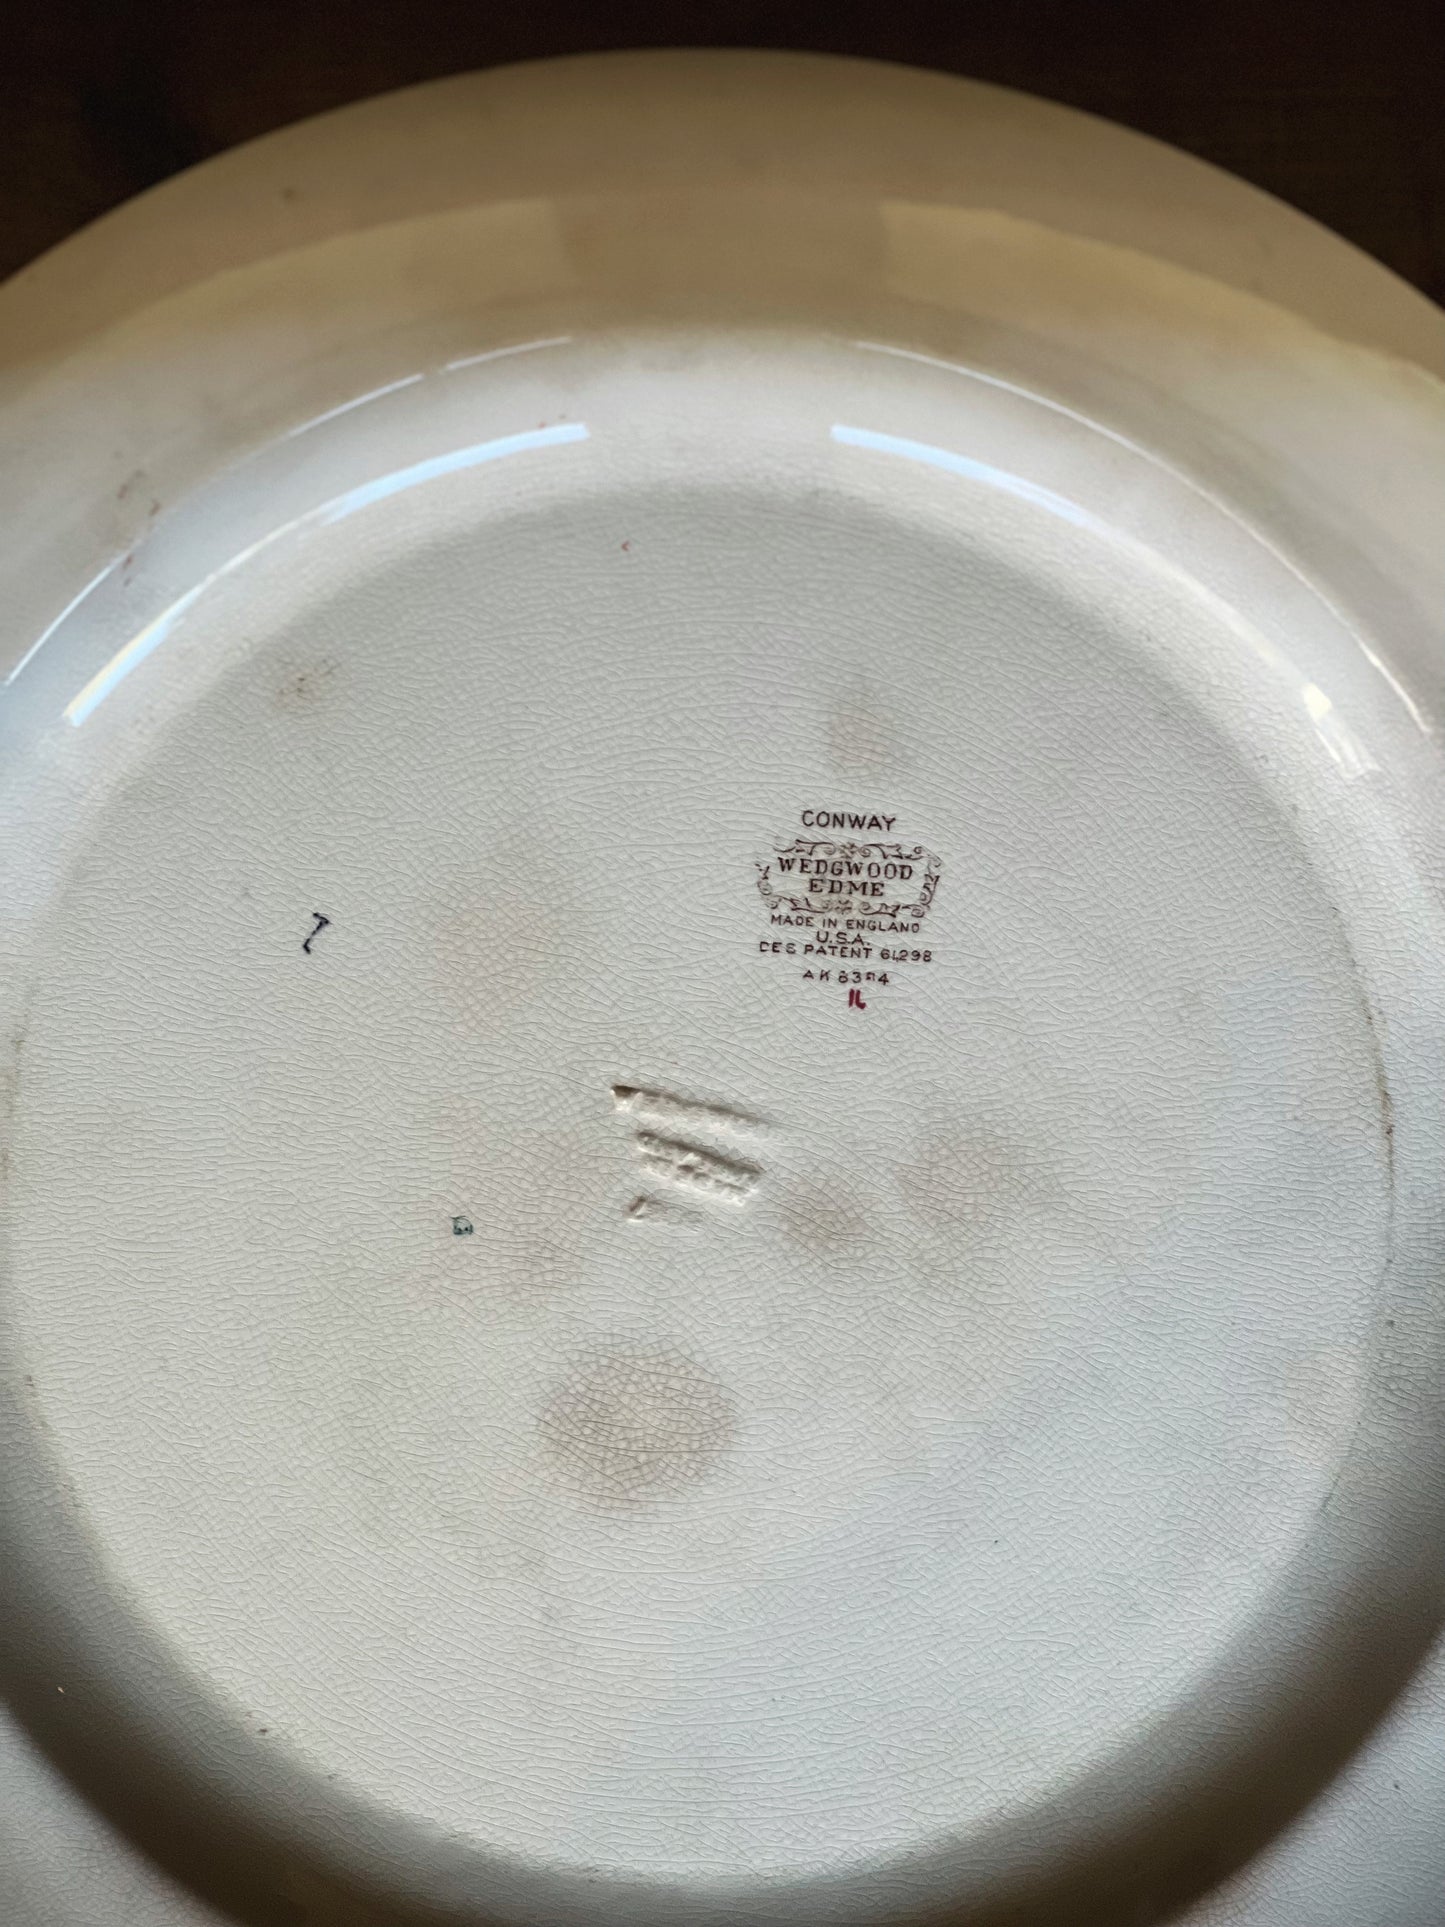 Vintage Wedgwood Conway Round Platter